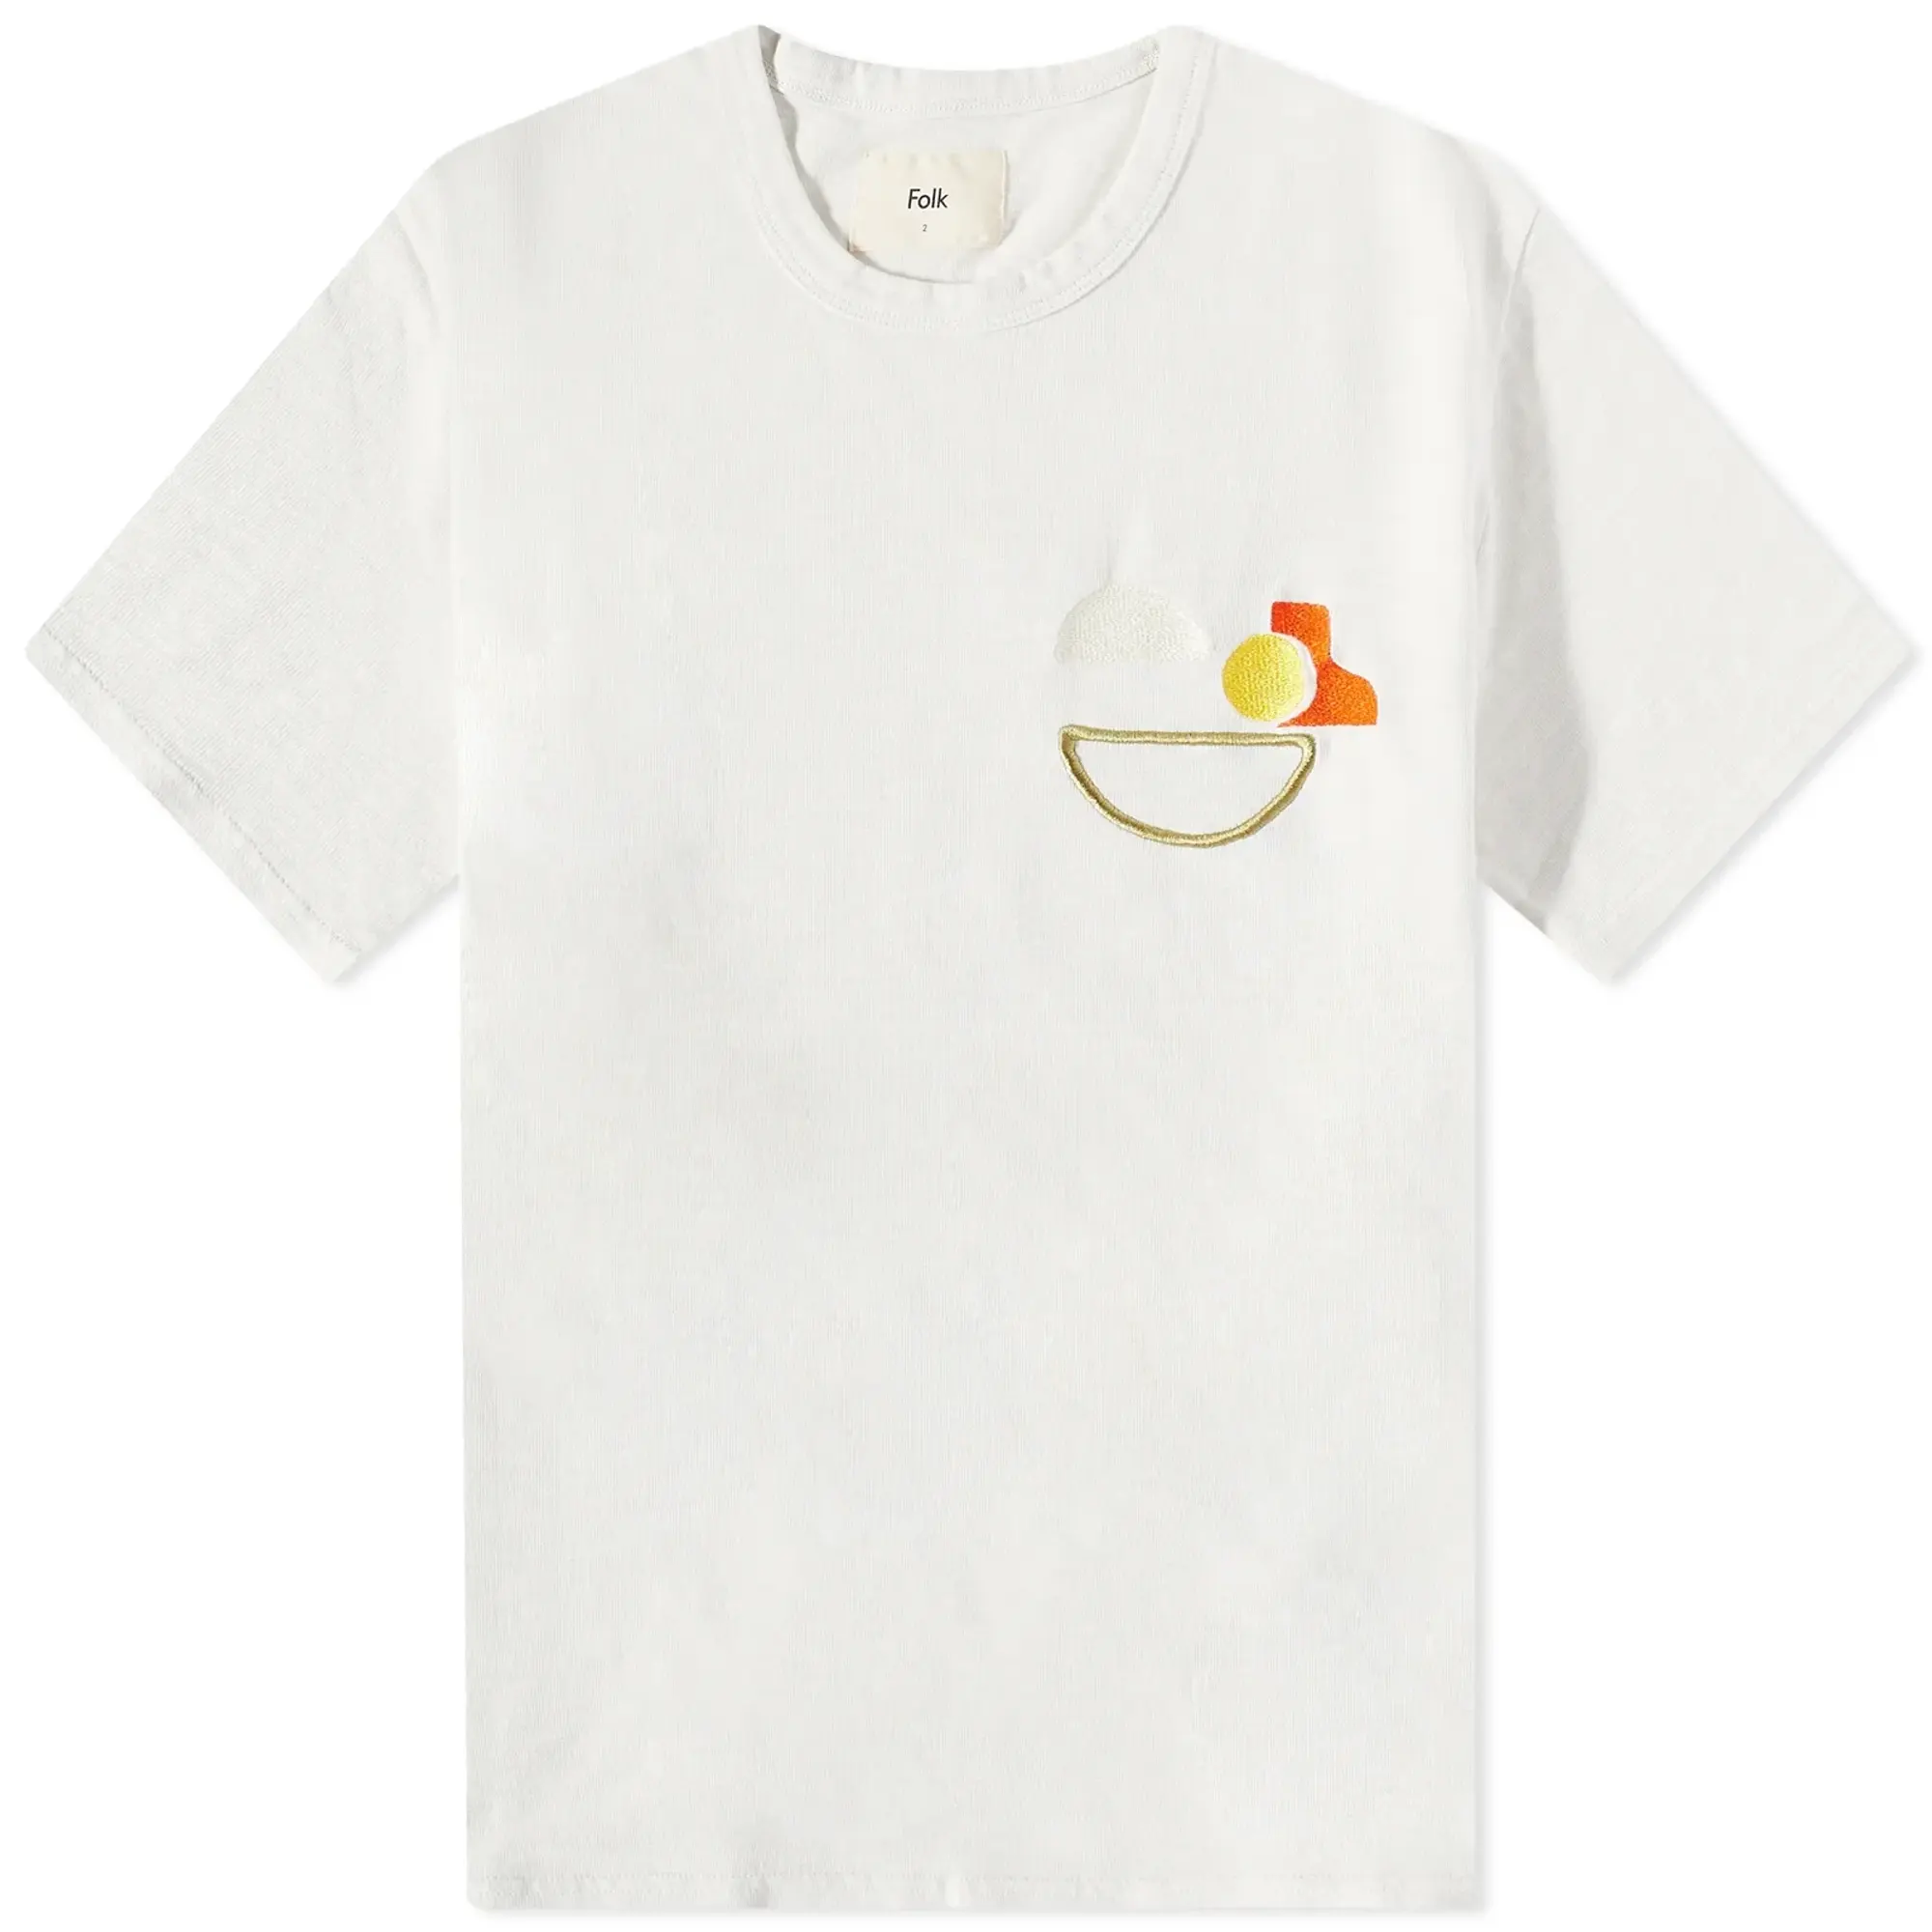 Folk Men's Embroidered T-Shirt Off White